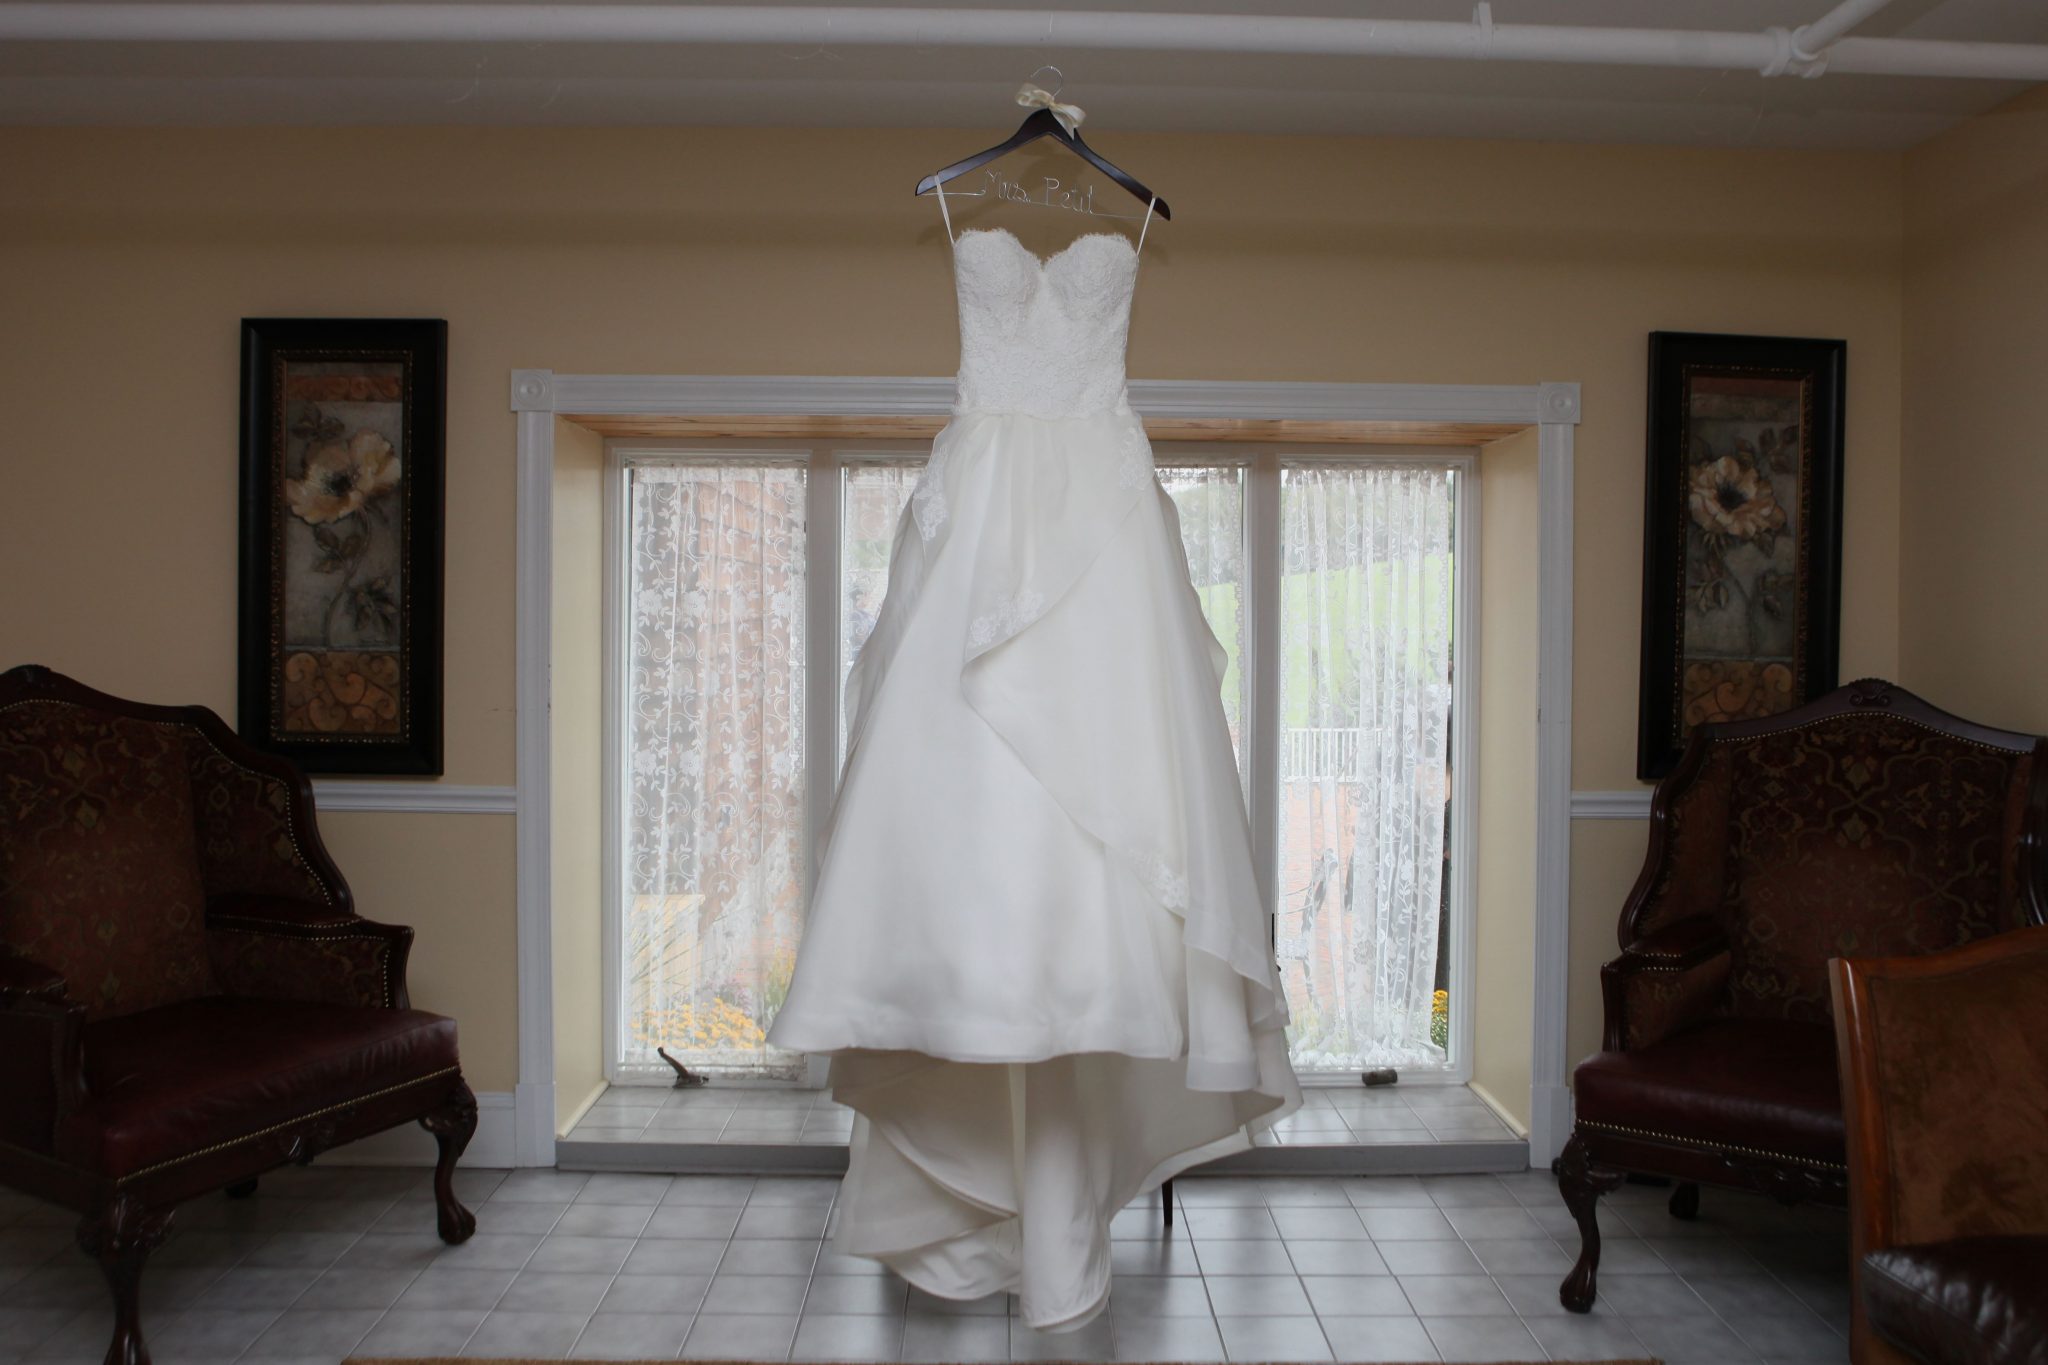 Bride's dress hangs in the bride's room before the wedding ceremony.